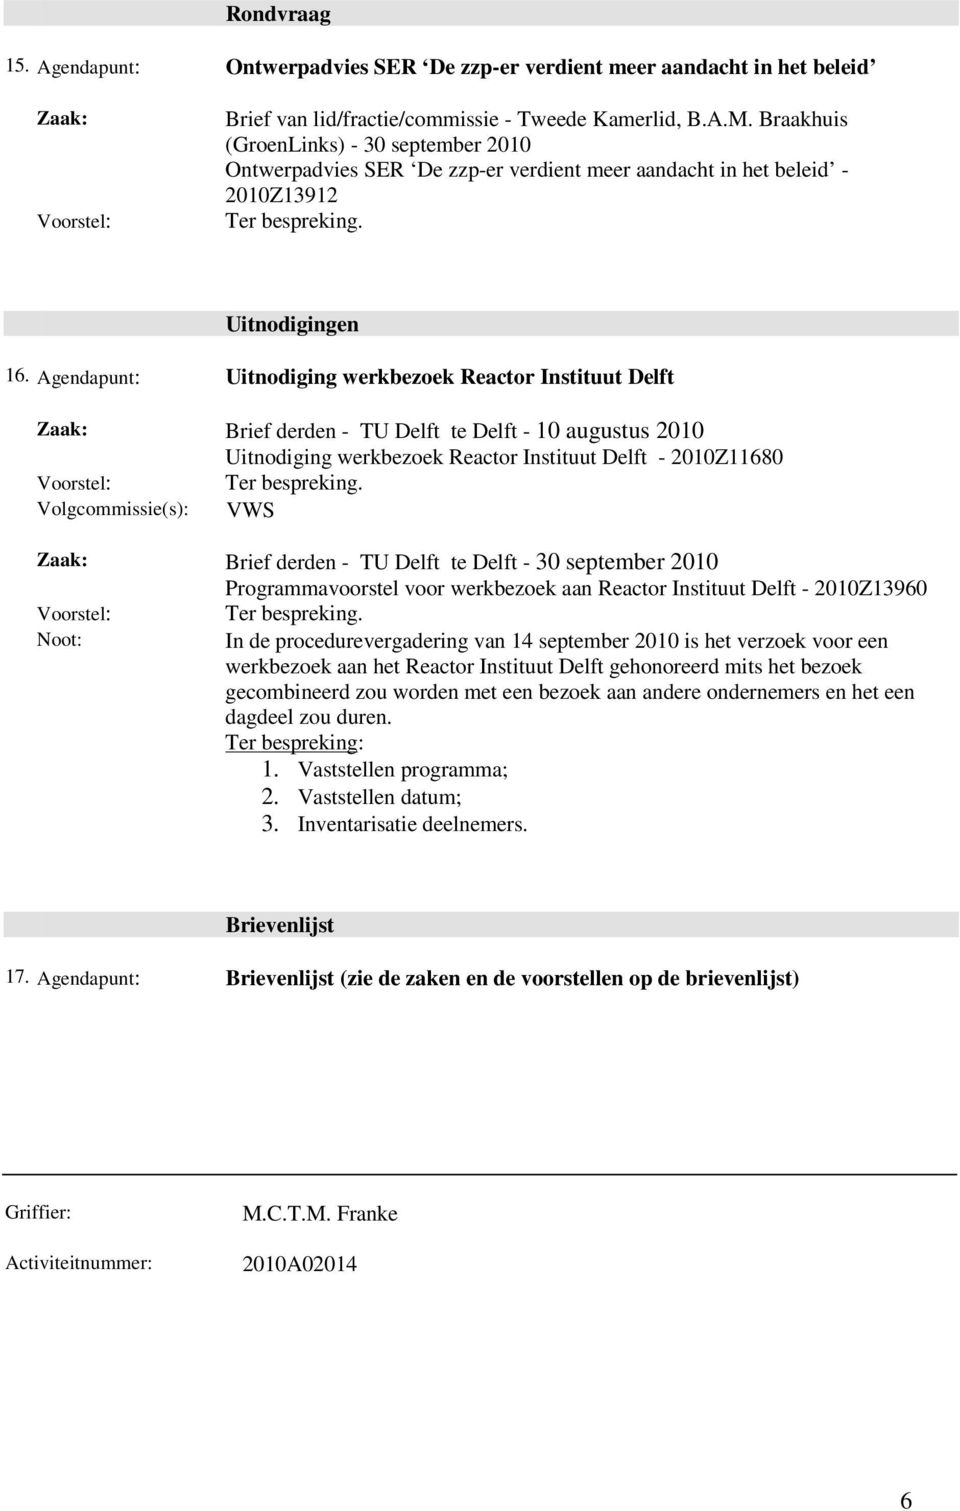 Agendapunt: Uitnodiging werkbezoek Reactor Instituut Delft Brief derden - TU Delft te Delft - 10 augustus 2010 Uitnodiging werkbezoek Reactor Instituut Delft - 2010Z11680 Volgcommissie(s): VWS Brief